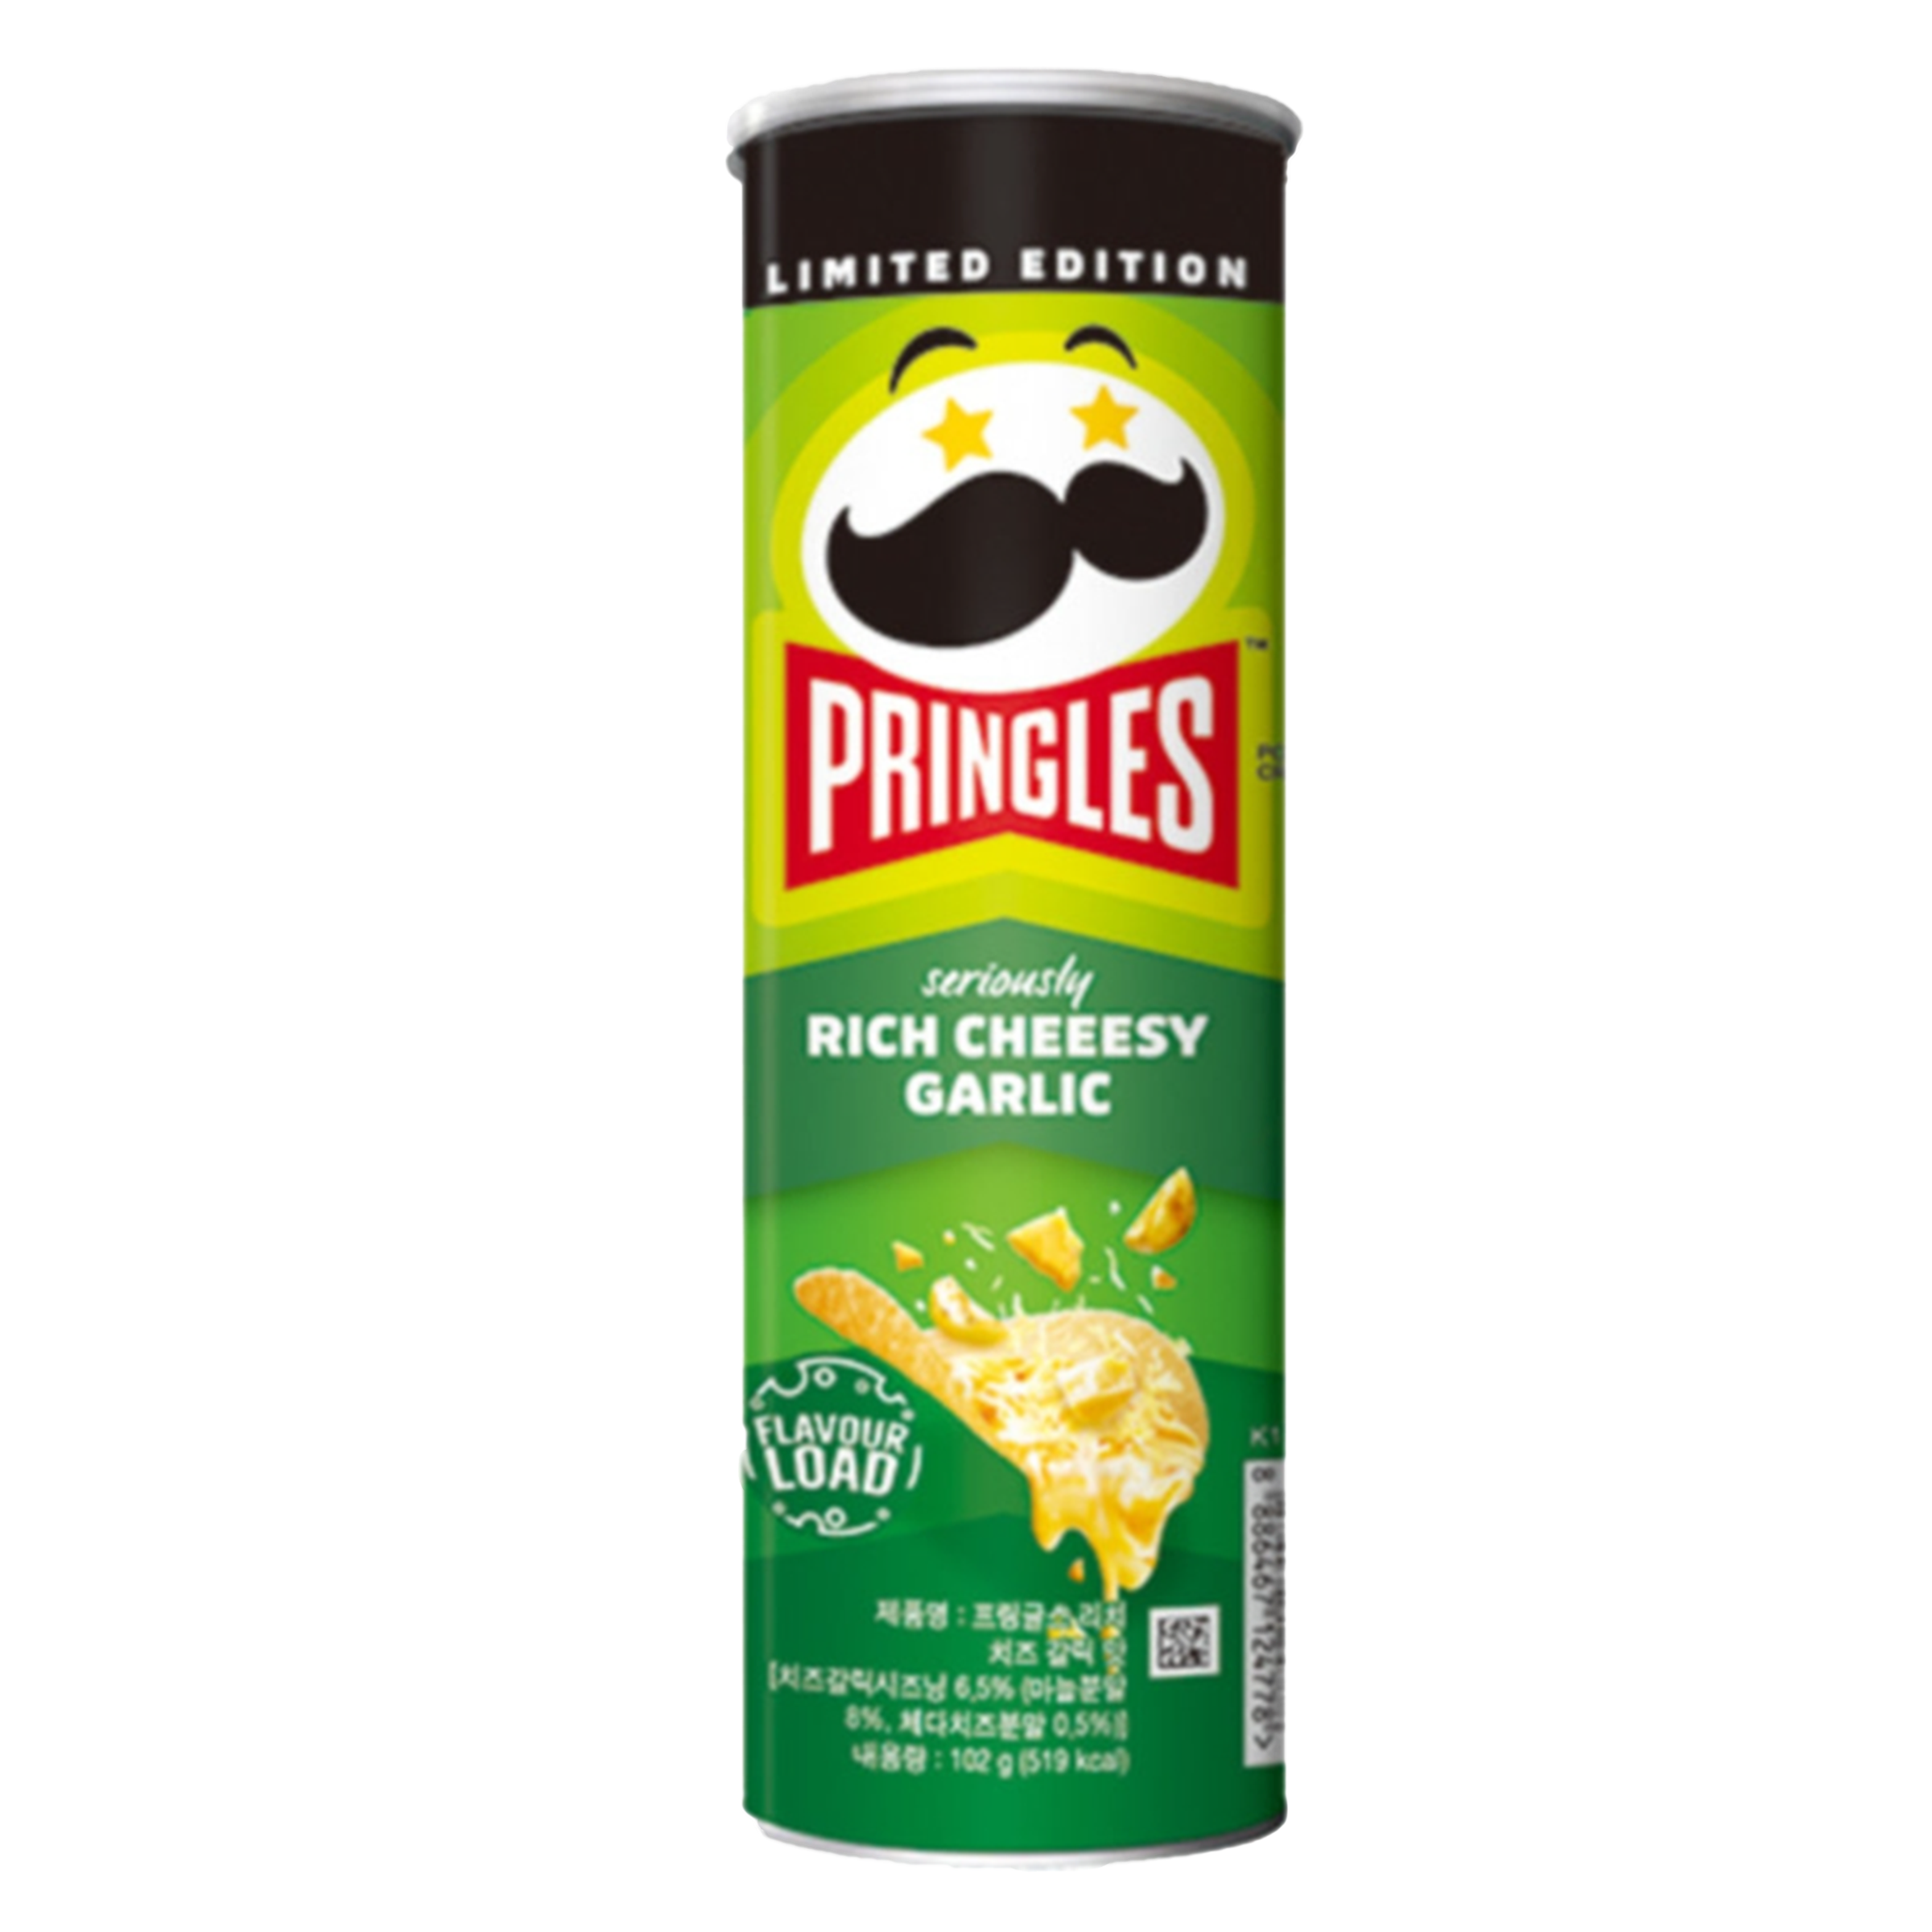 Pringles - Rich Cheesy Garlic (Korea)